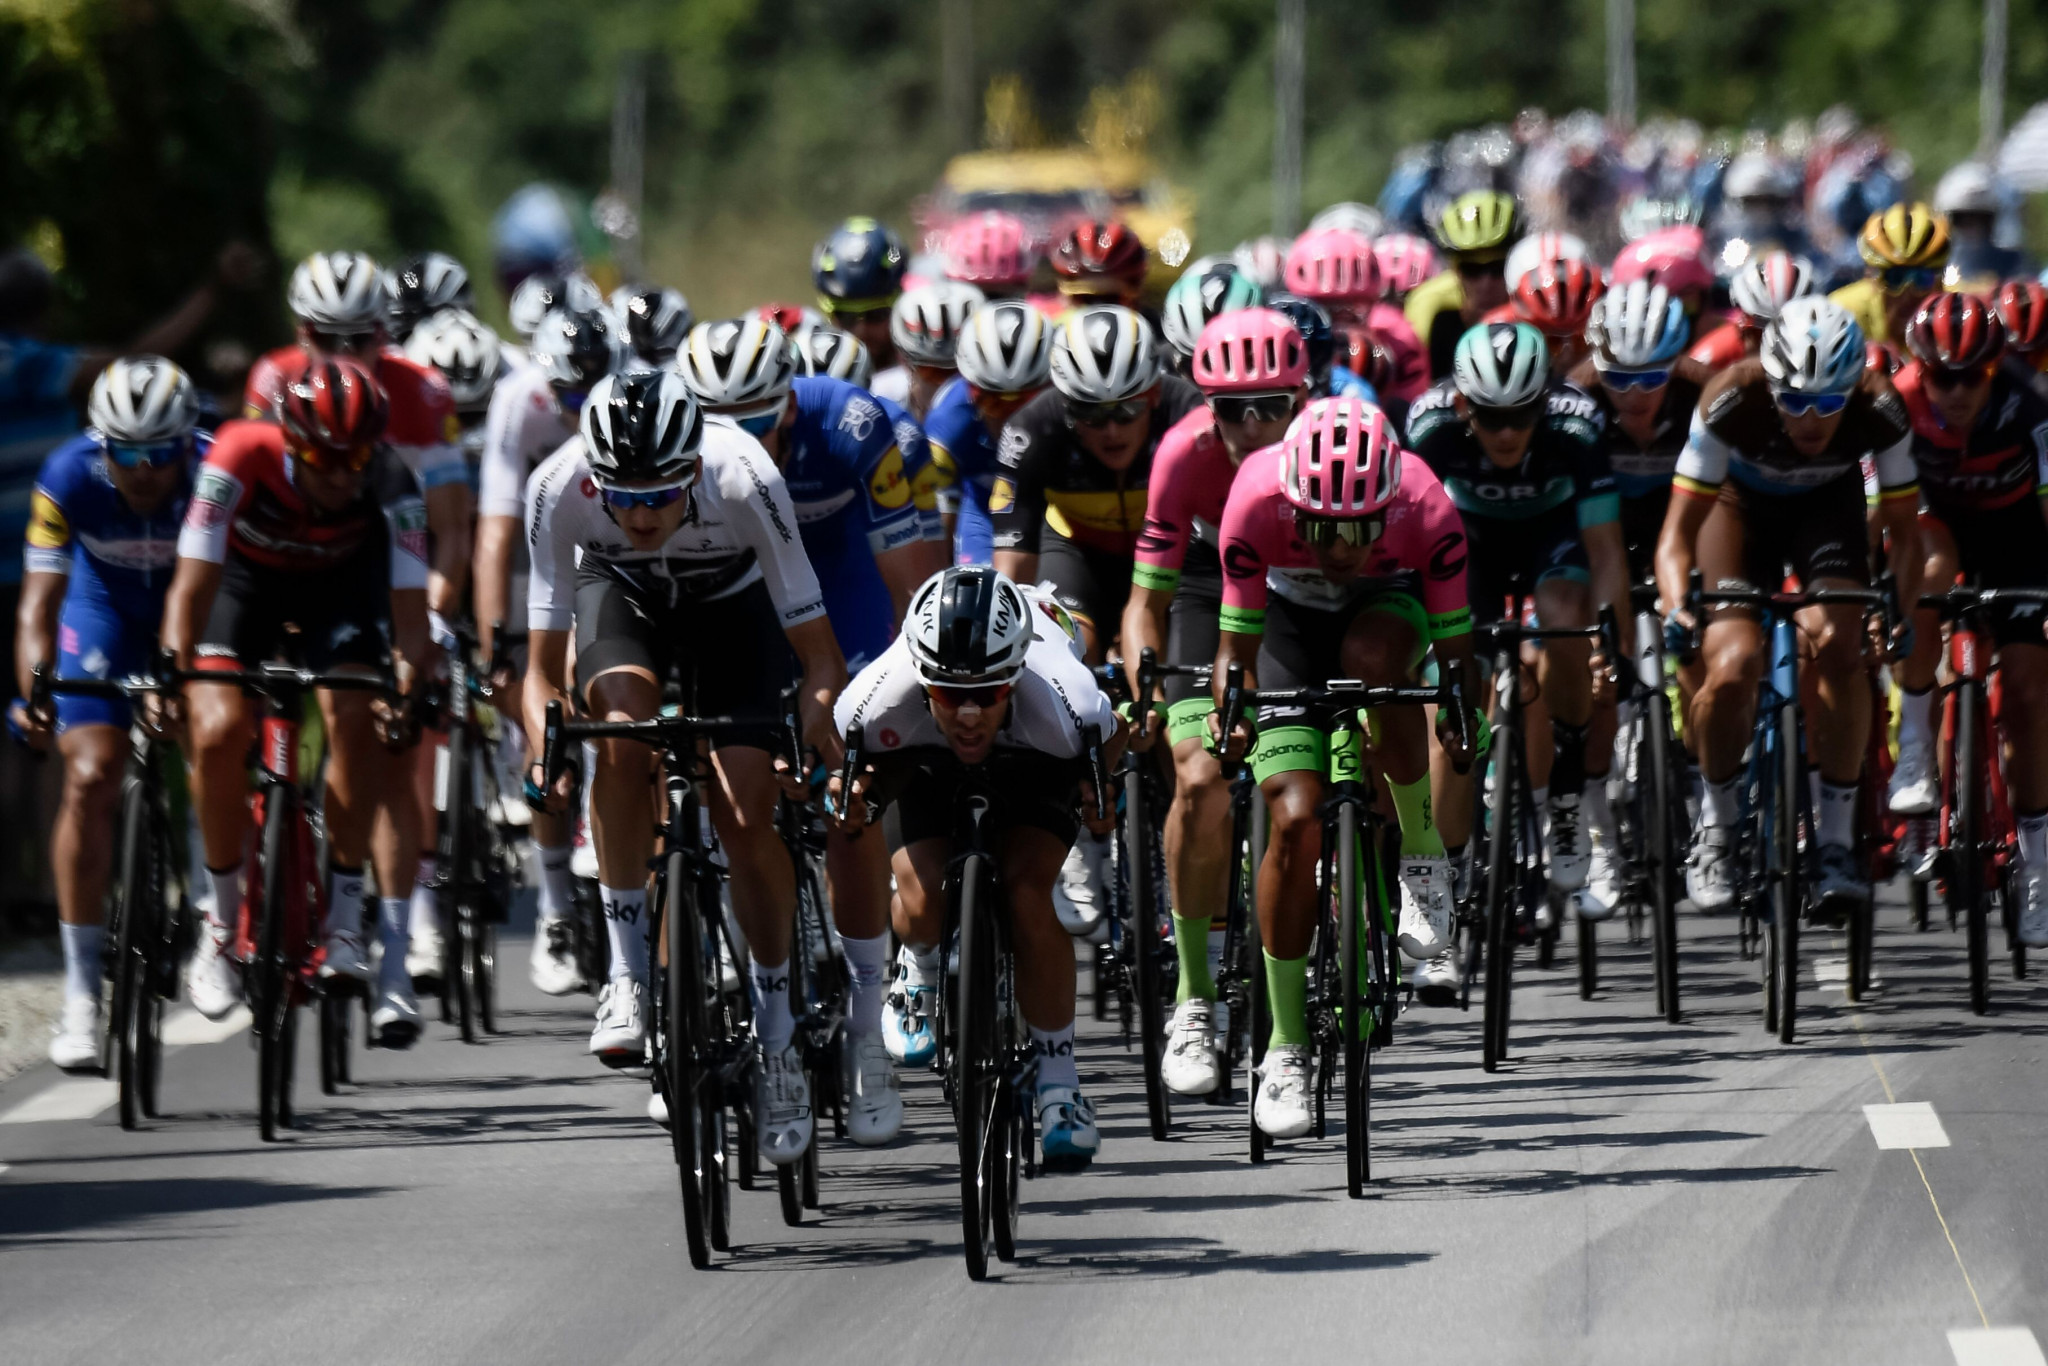 Brest will host the 2021 Tour de France Grand Depart ©Getty Images